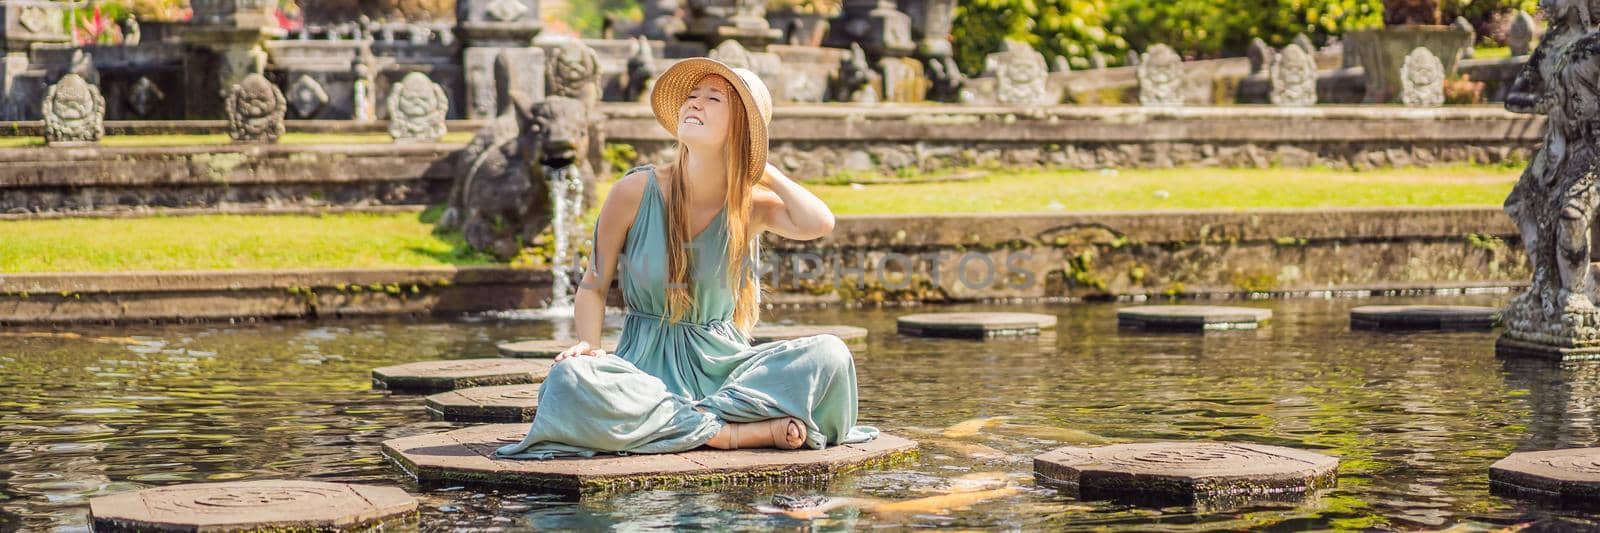 Young woman tourist in Taman Tirtagangga, Water palace, Water park, Bali Indonesia. BANNER, LONG FORMAT